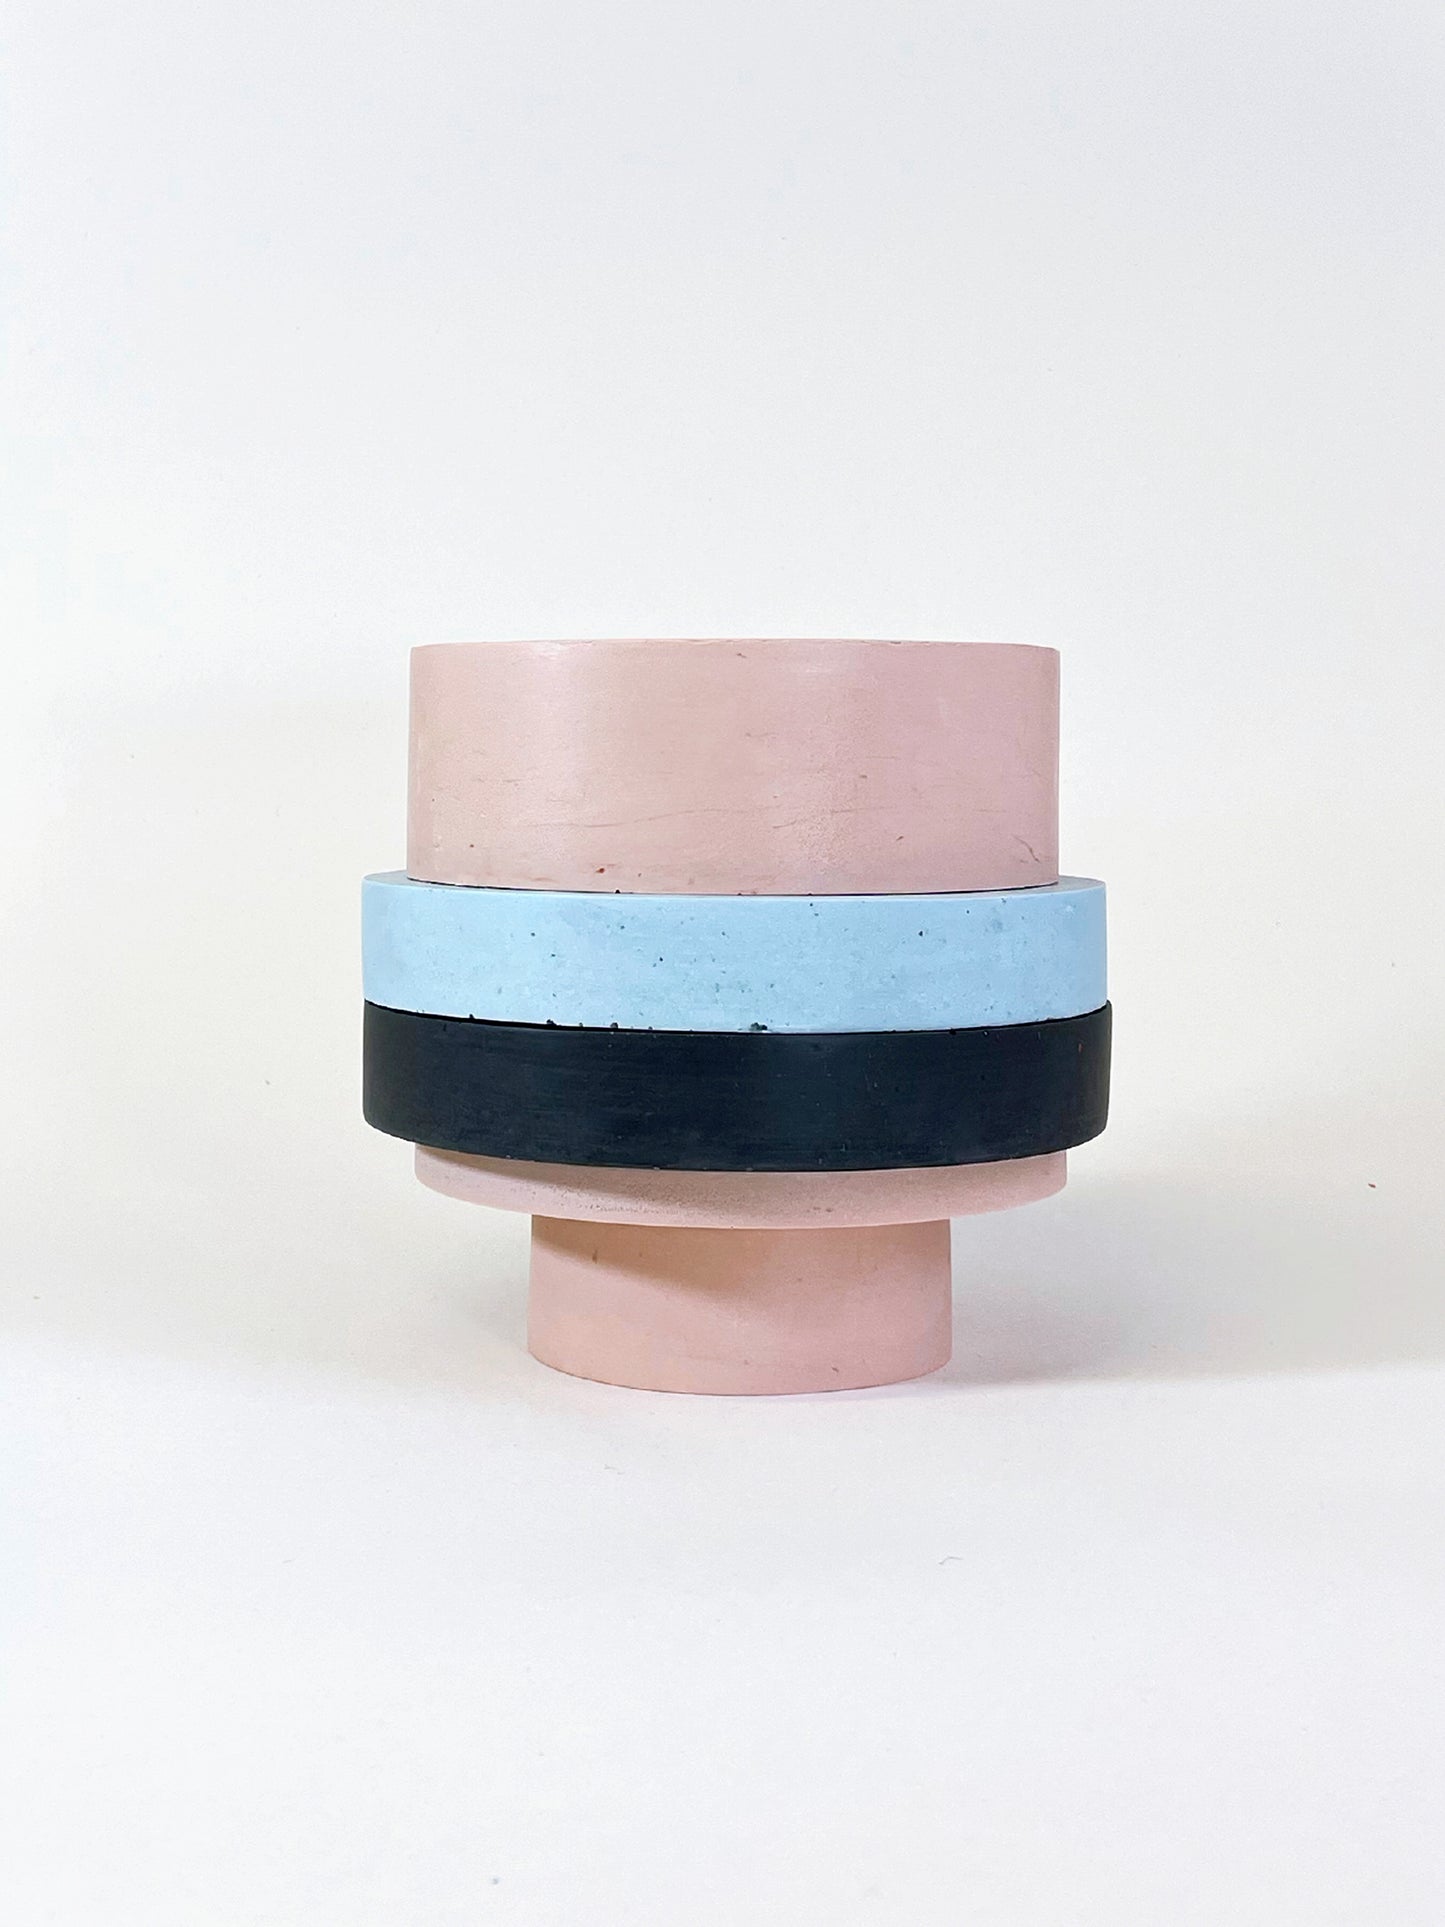 Totemico Large Pot- Blusk Pink, Blue and Black